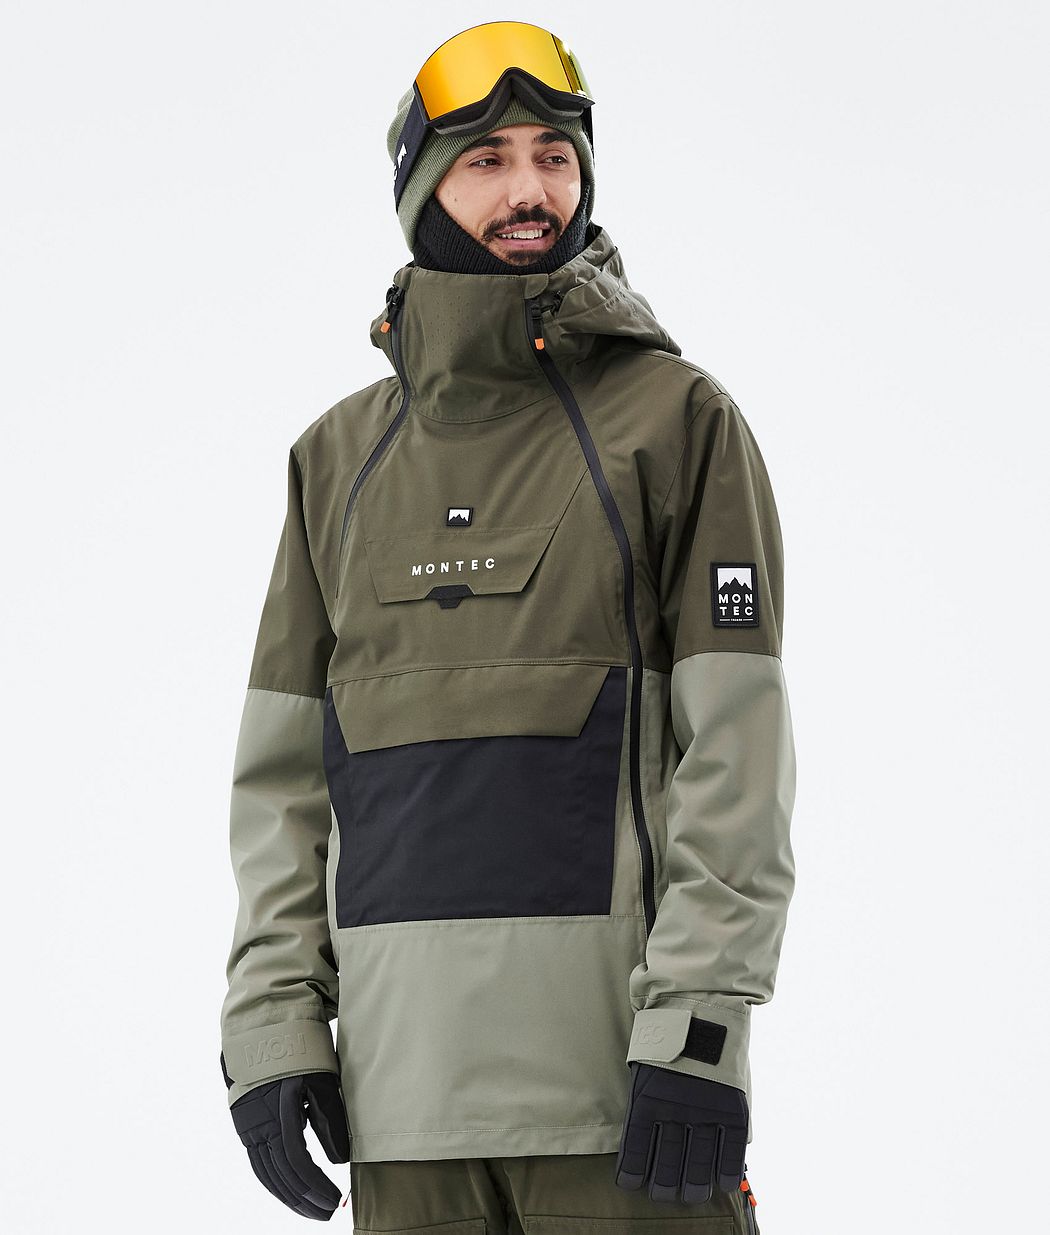 Montec Doom Men's Ski Jacket Olive Green/Black/Greenish | Montecwear.com